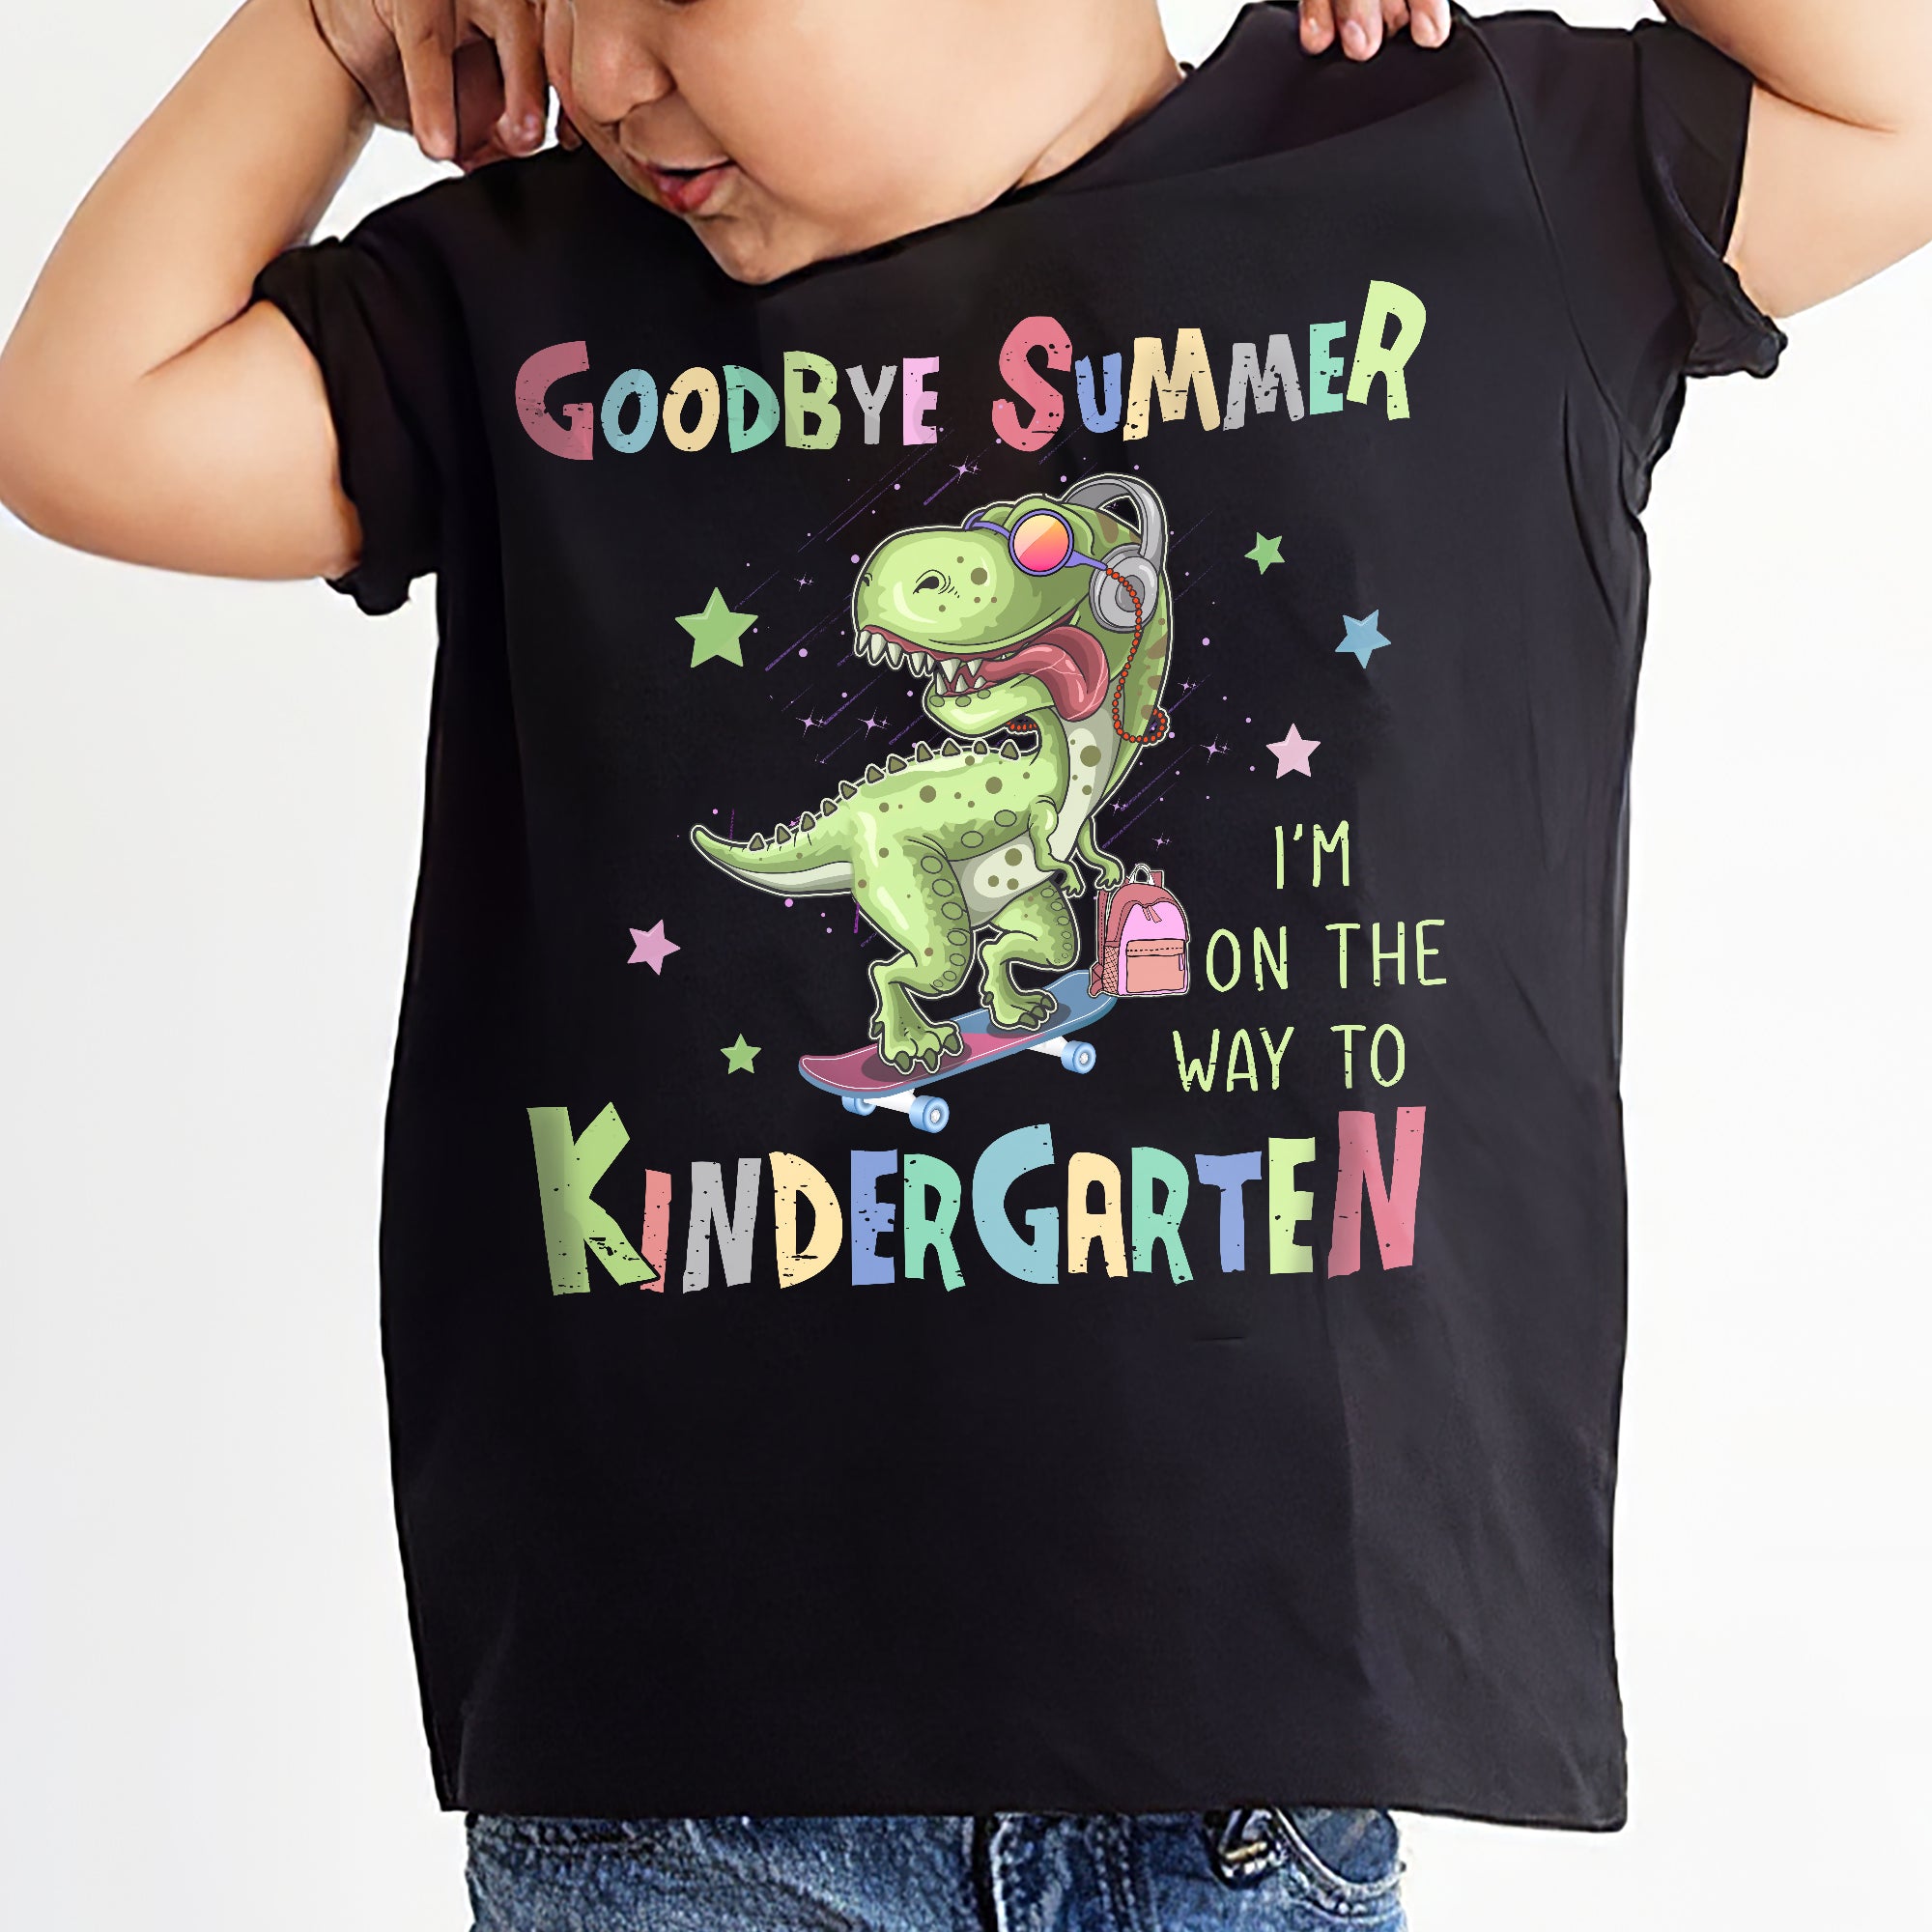 Dinosaur - Goodbye summer, I'm on the way to kindergarten - Dinosaur T-shirt